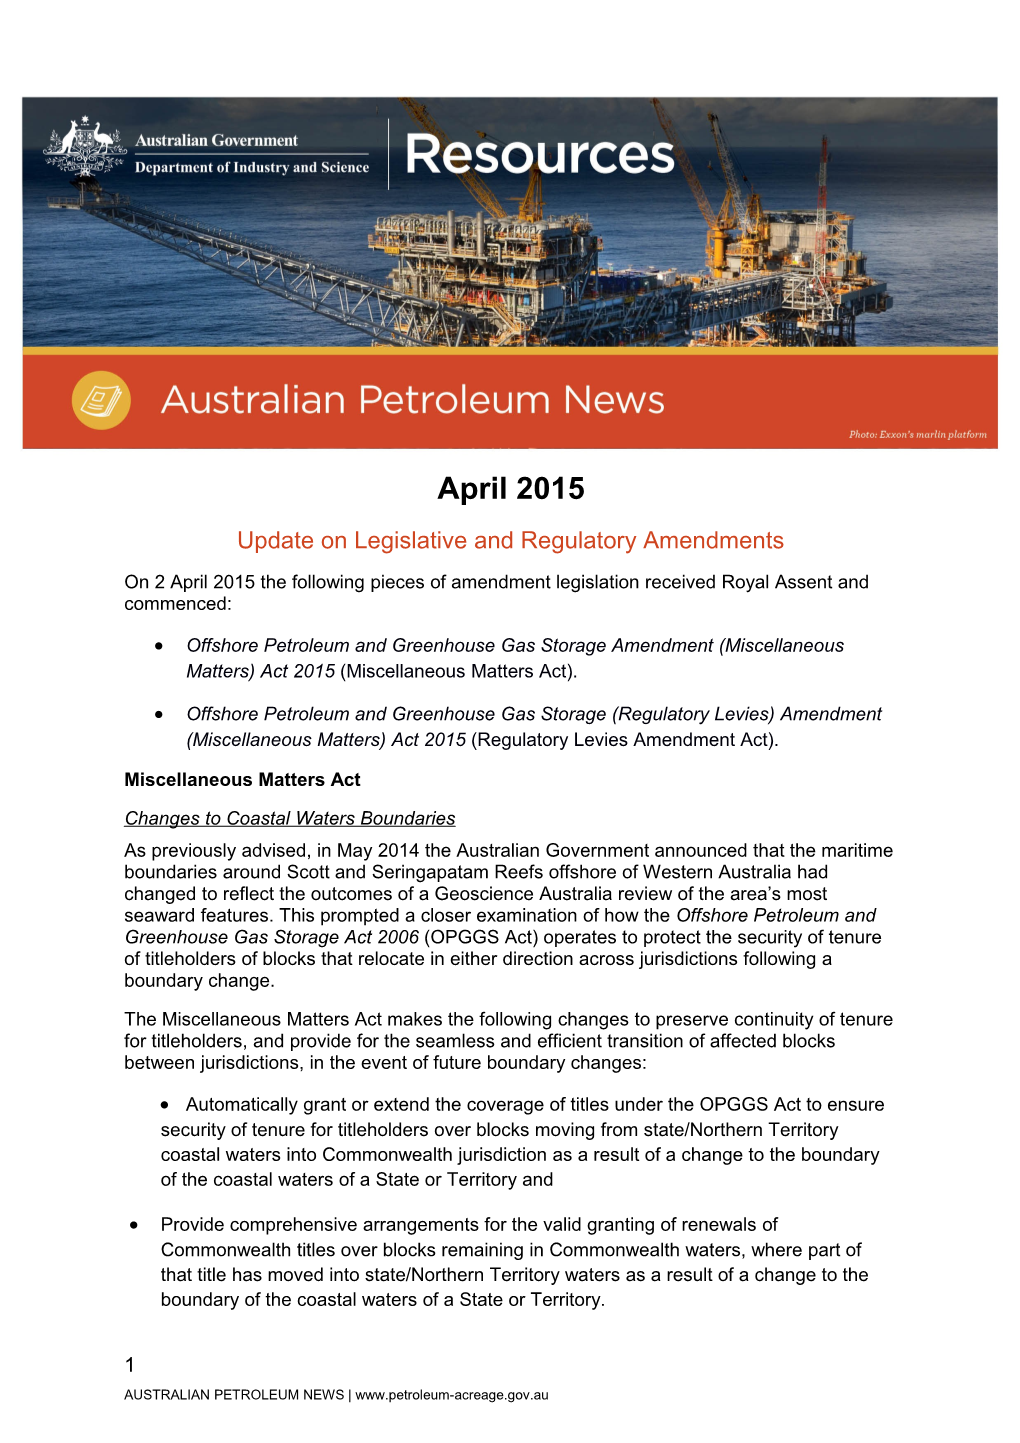 Australian Petroleum News - April 2015